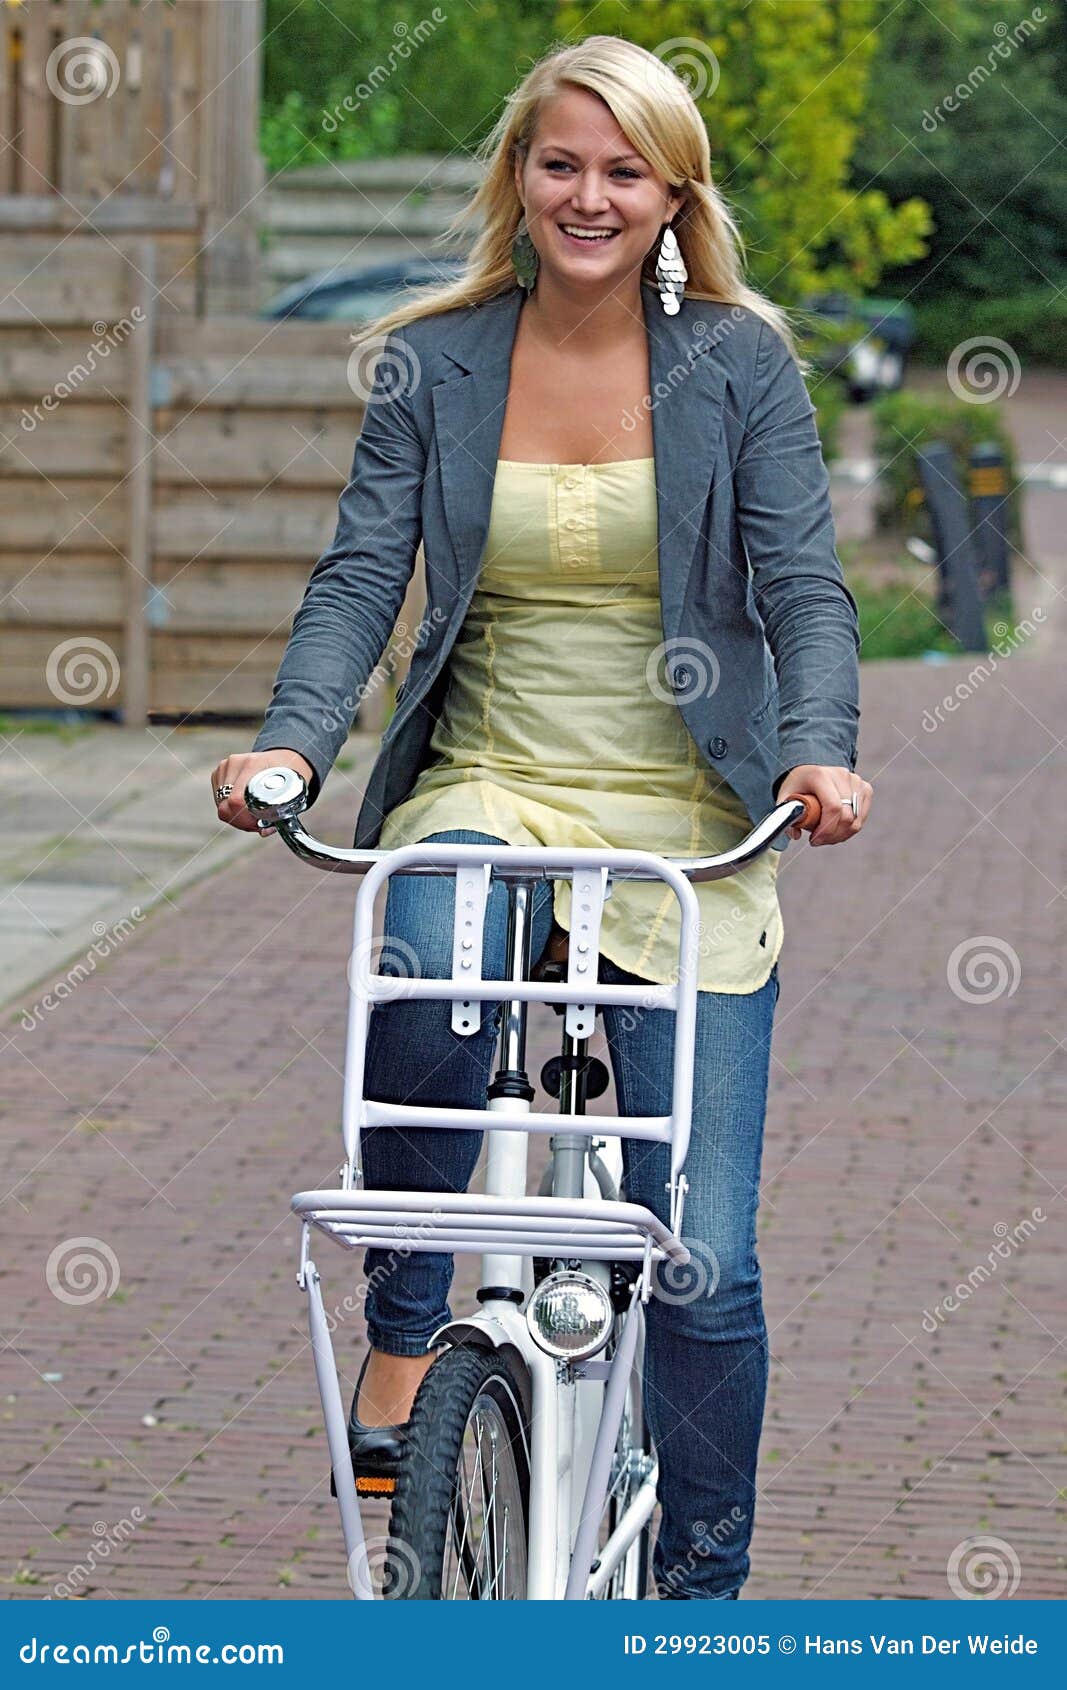 young woman on bike